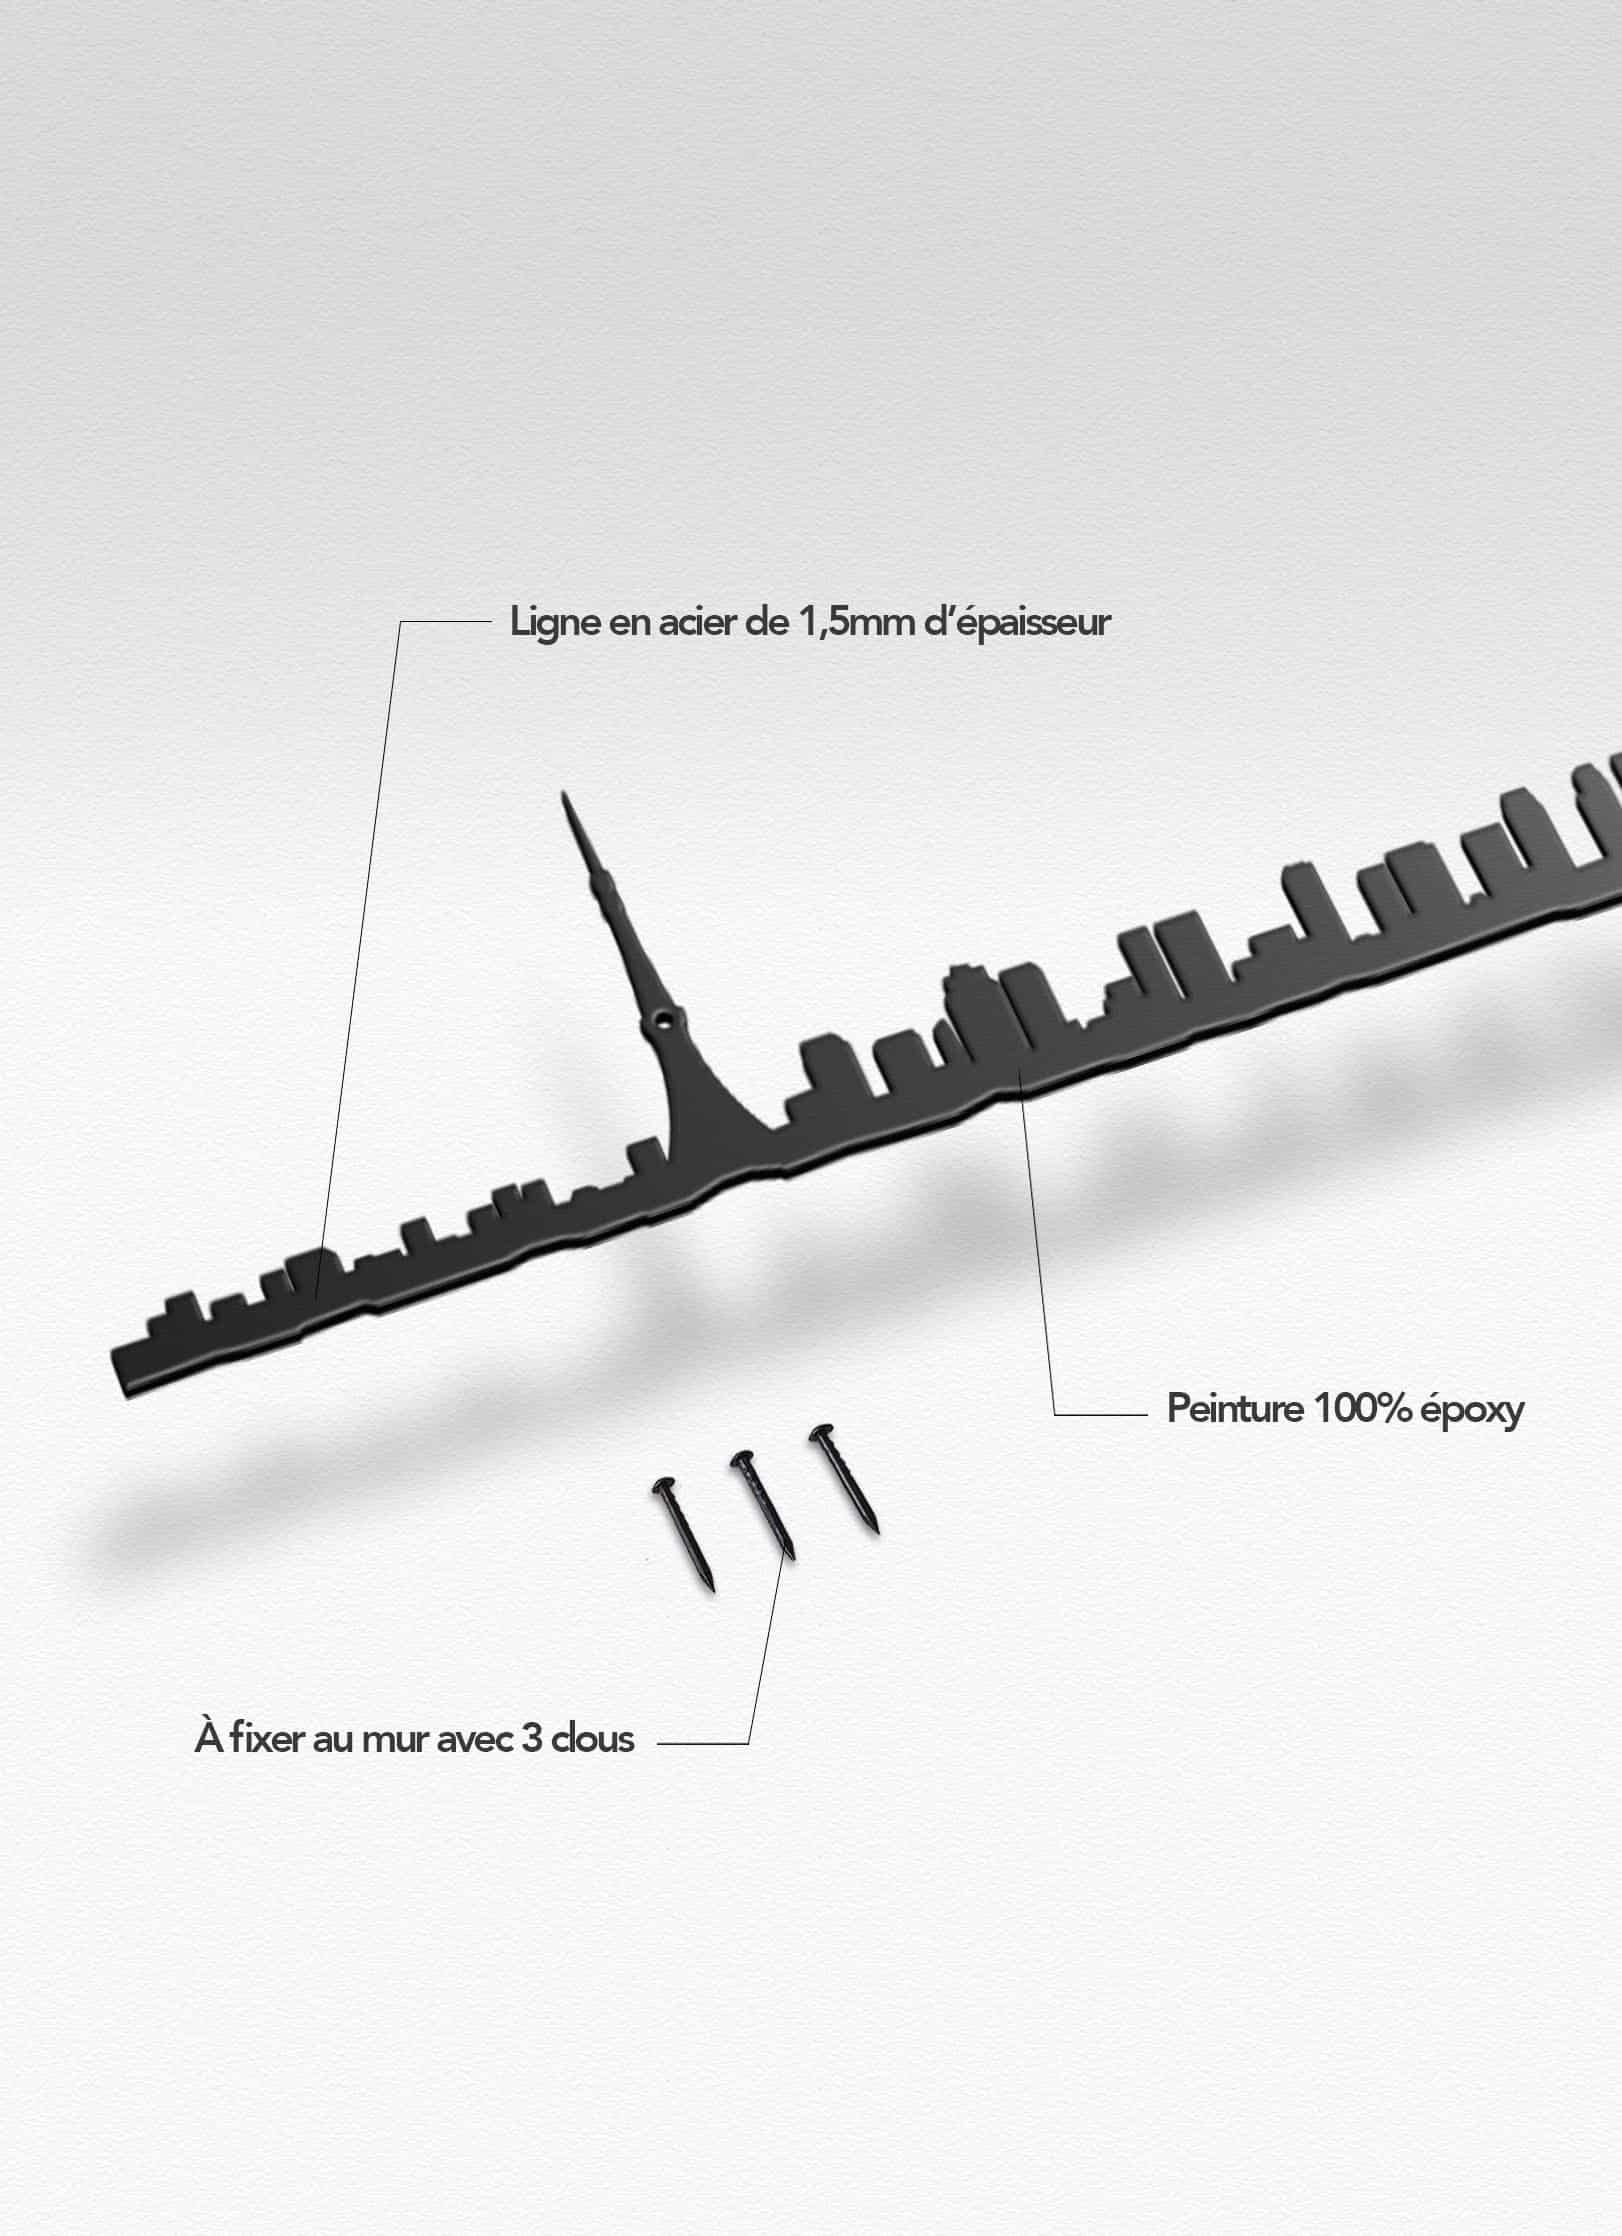 Presentation of the skyline of Tokyo